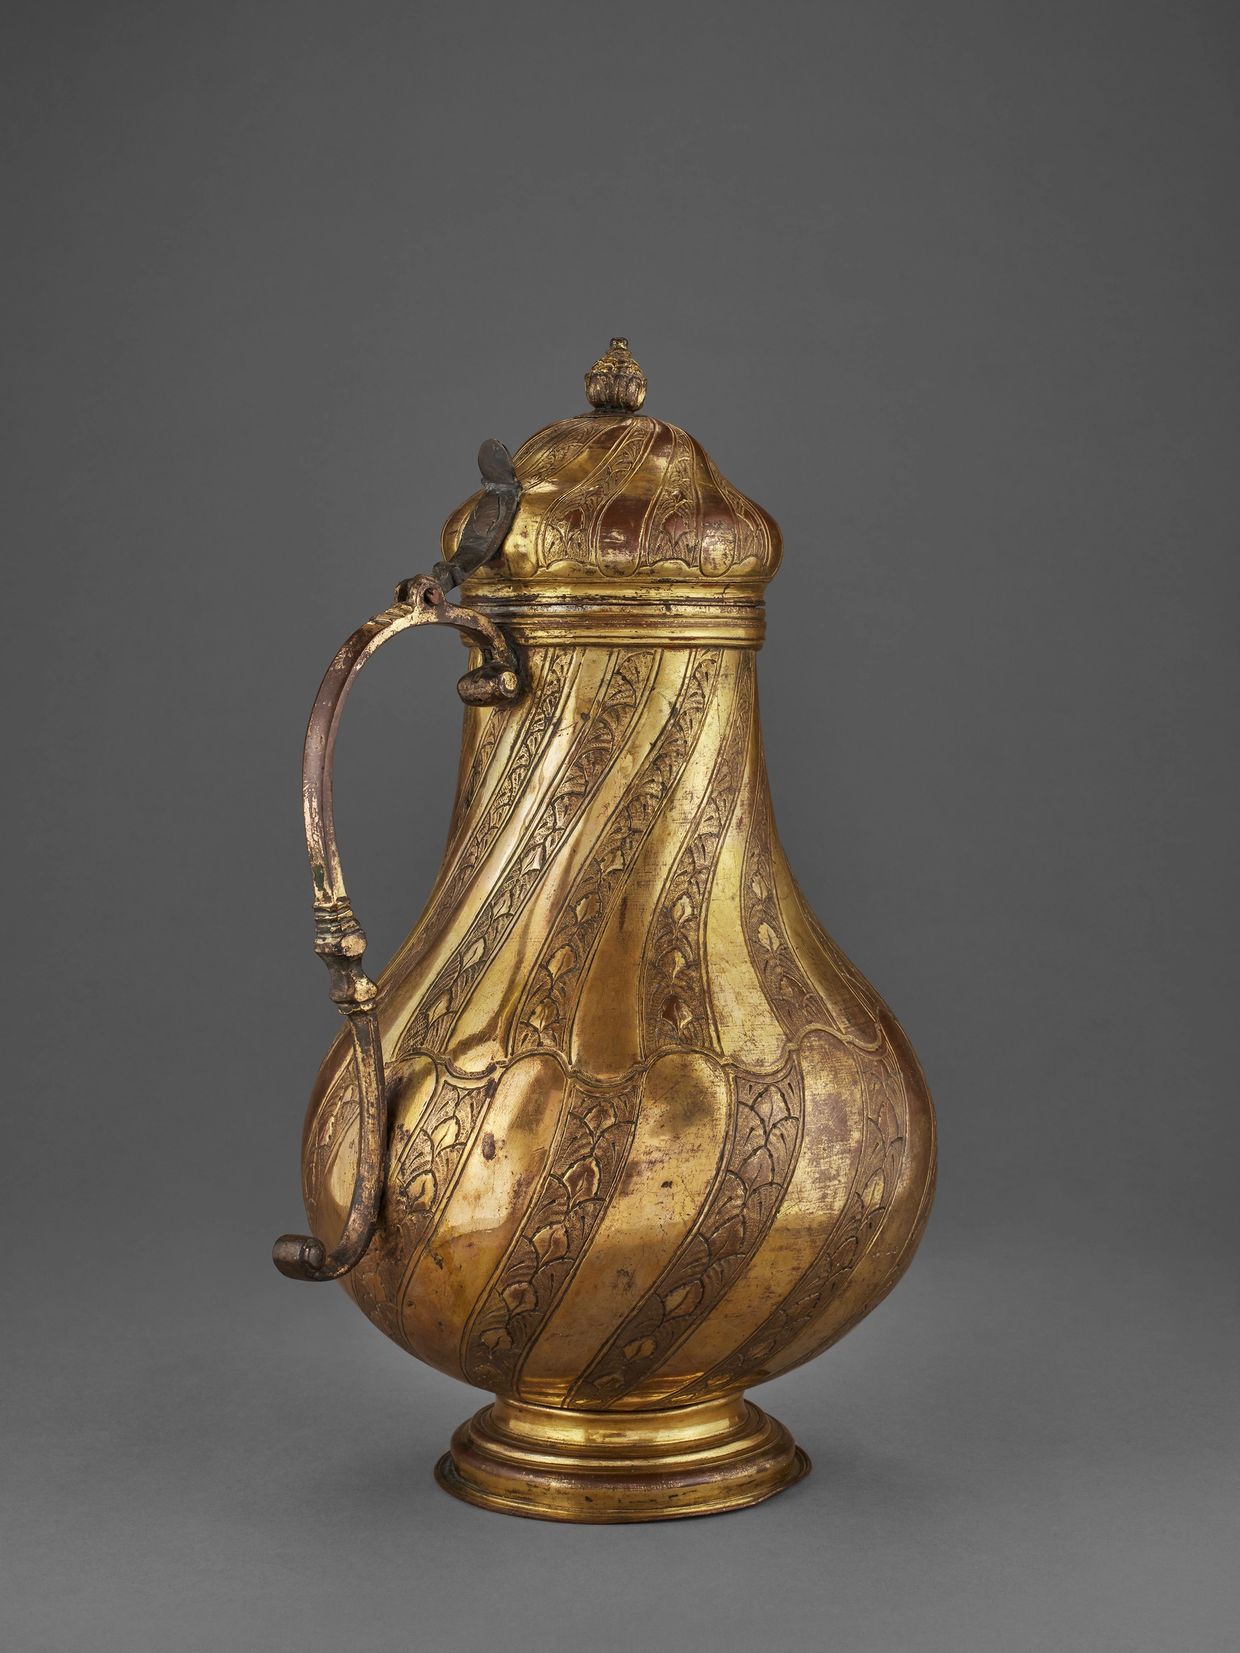 A Large and Rare Ottoman Tombak Ewer (şerbetlik or bozalık), Turkey, late 18th or early 19th century